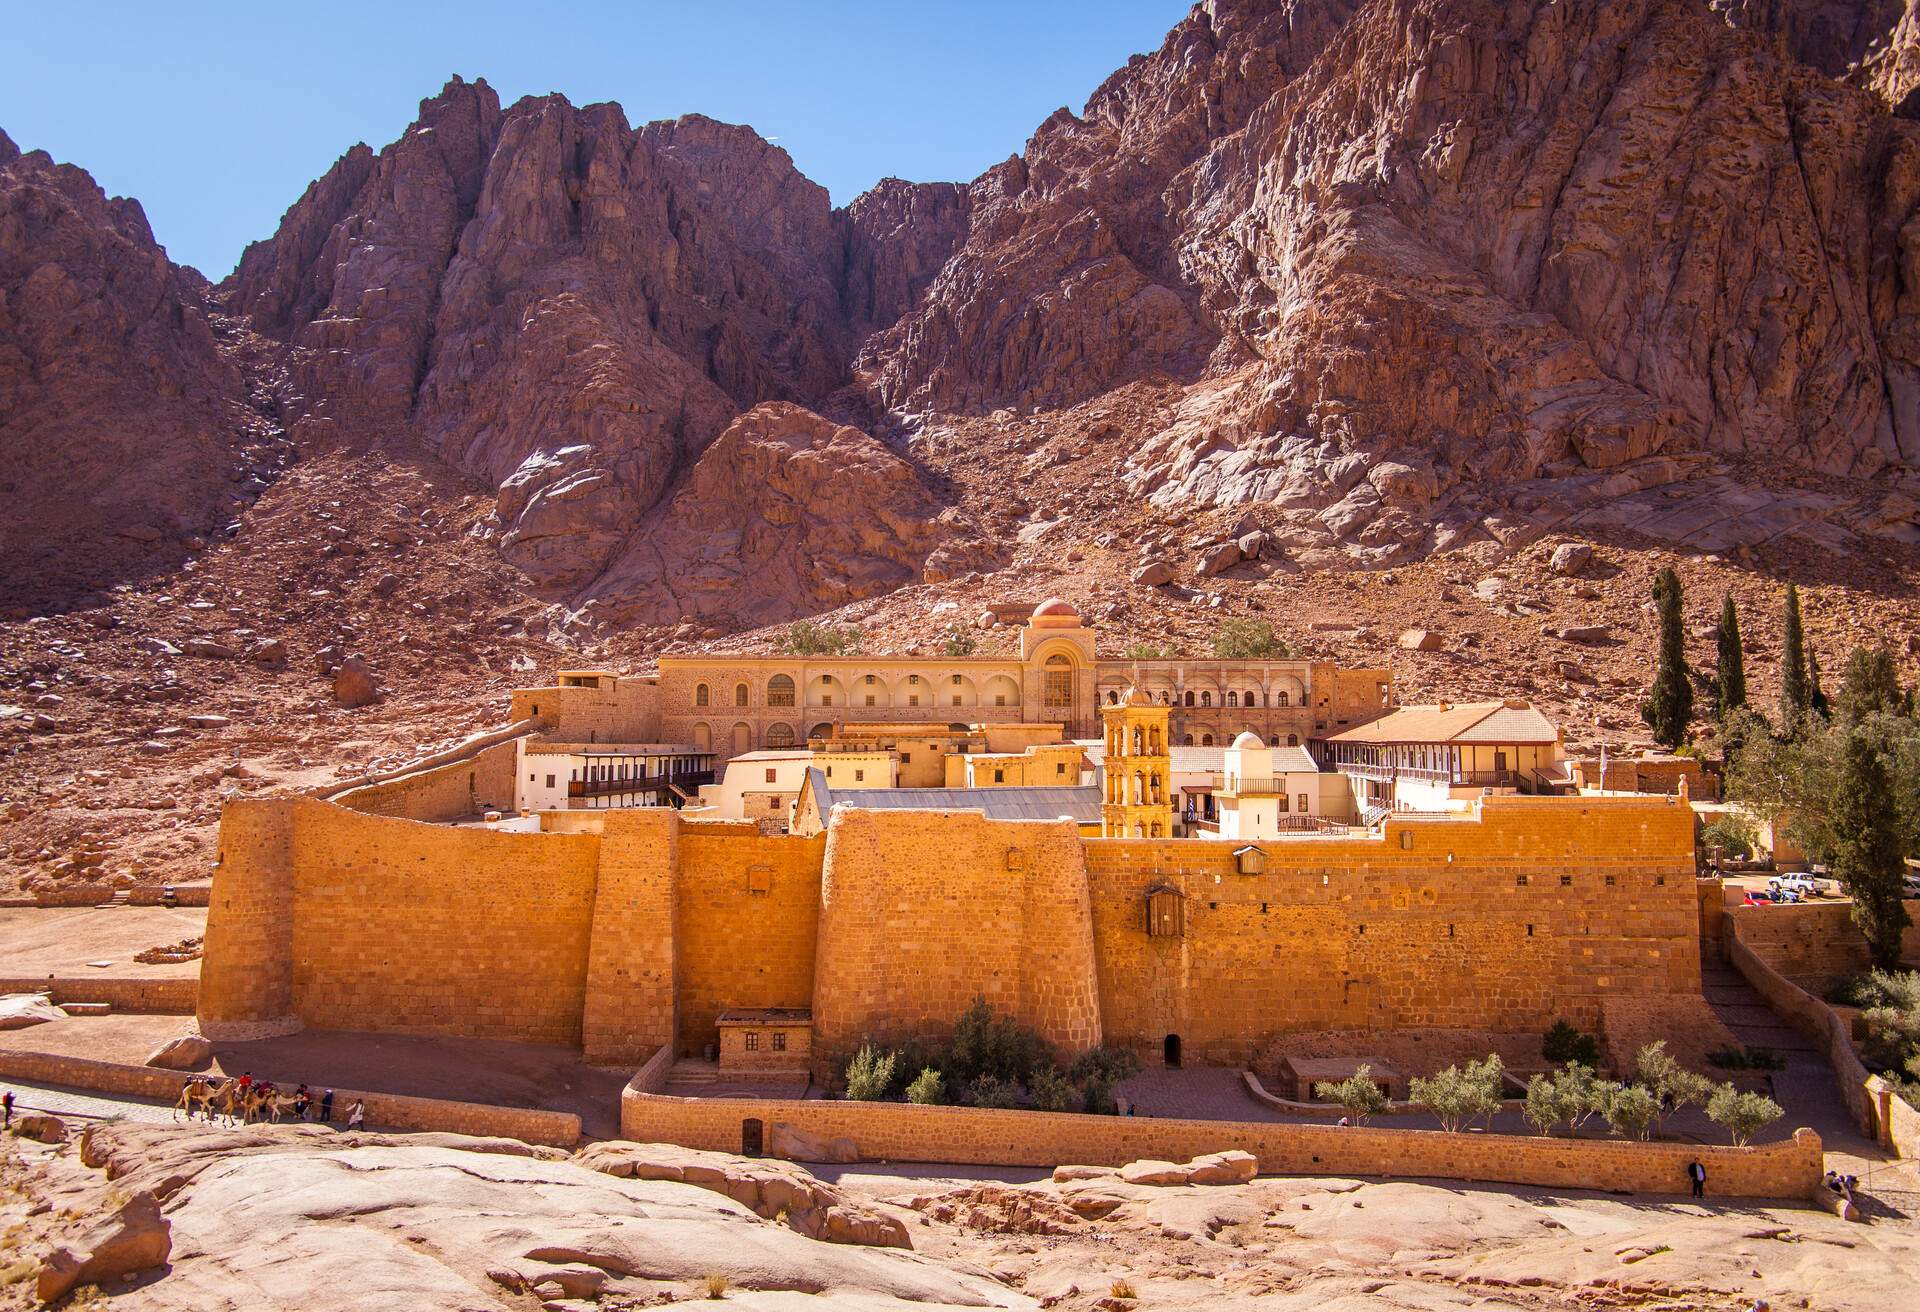 Saint Catherine's Monastery at the base of Mount Sinai, Egypt